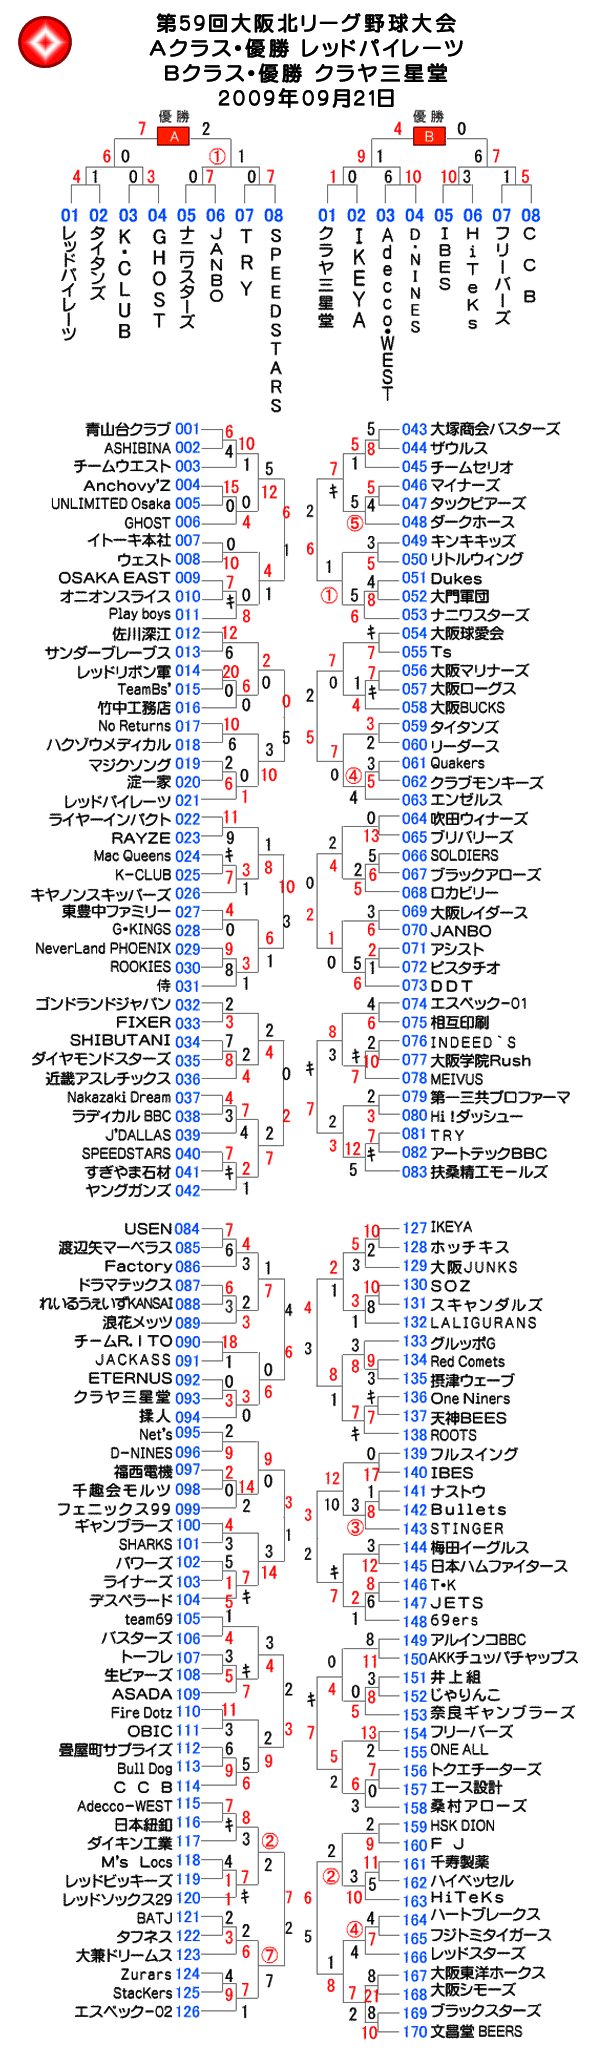 第59回大阪北リーグ野球大会表